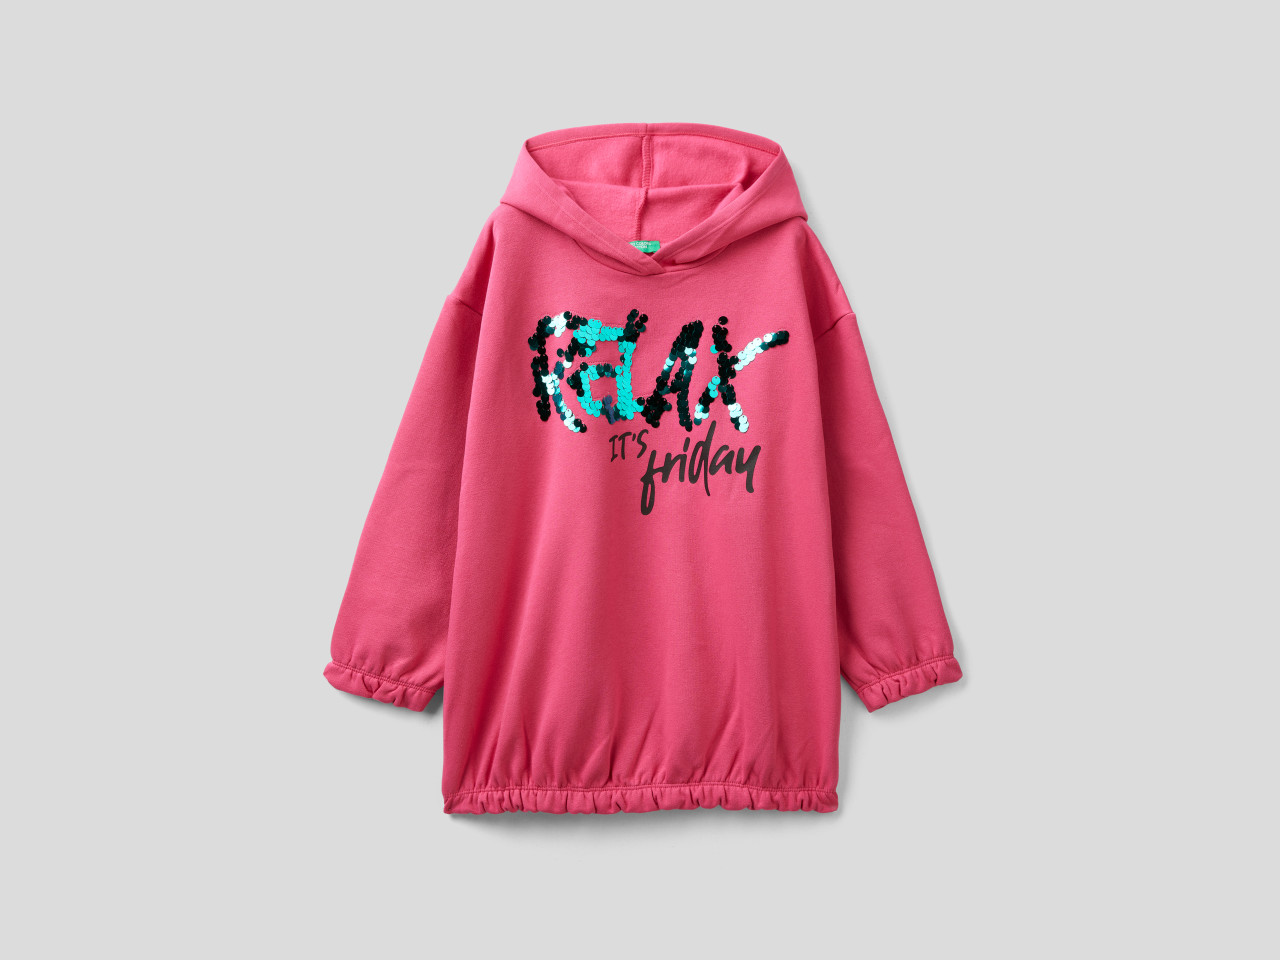 Hoodies & Sweatshirts for Girls - Ardene Kids